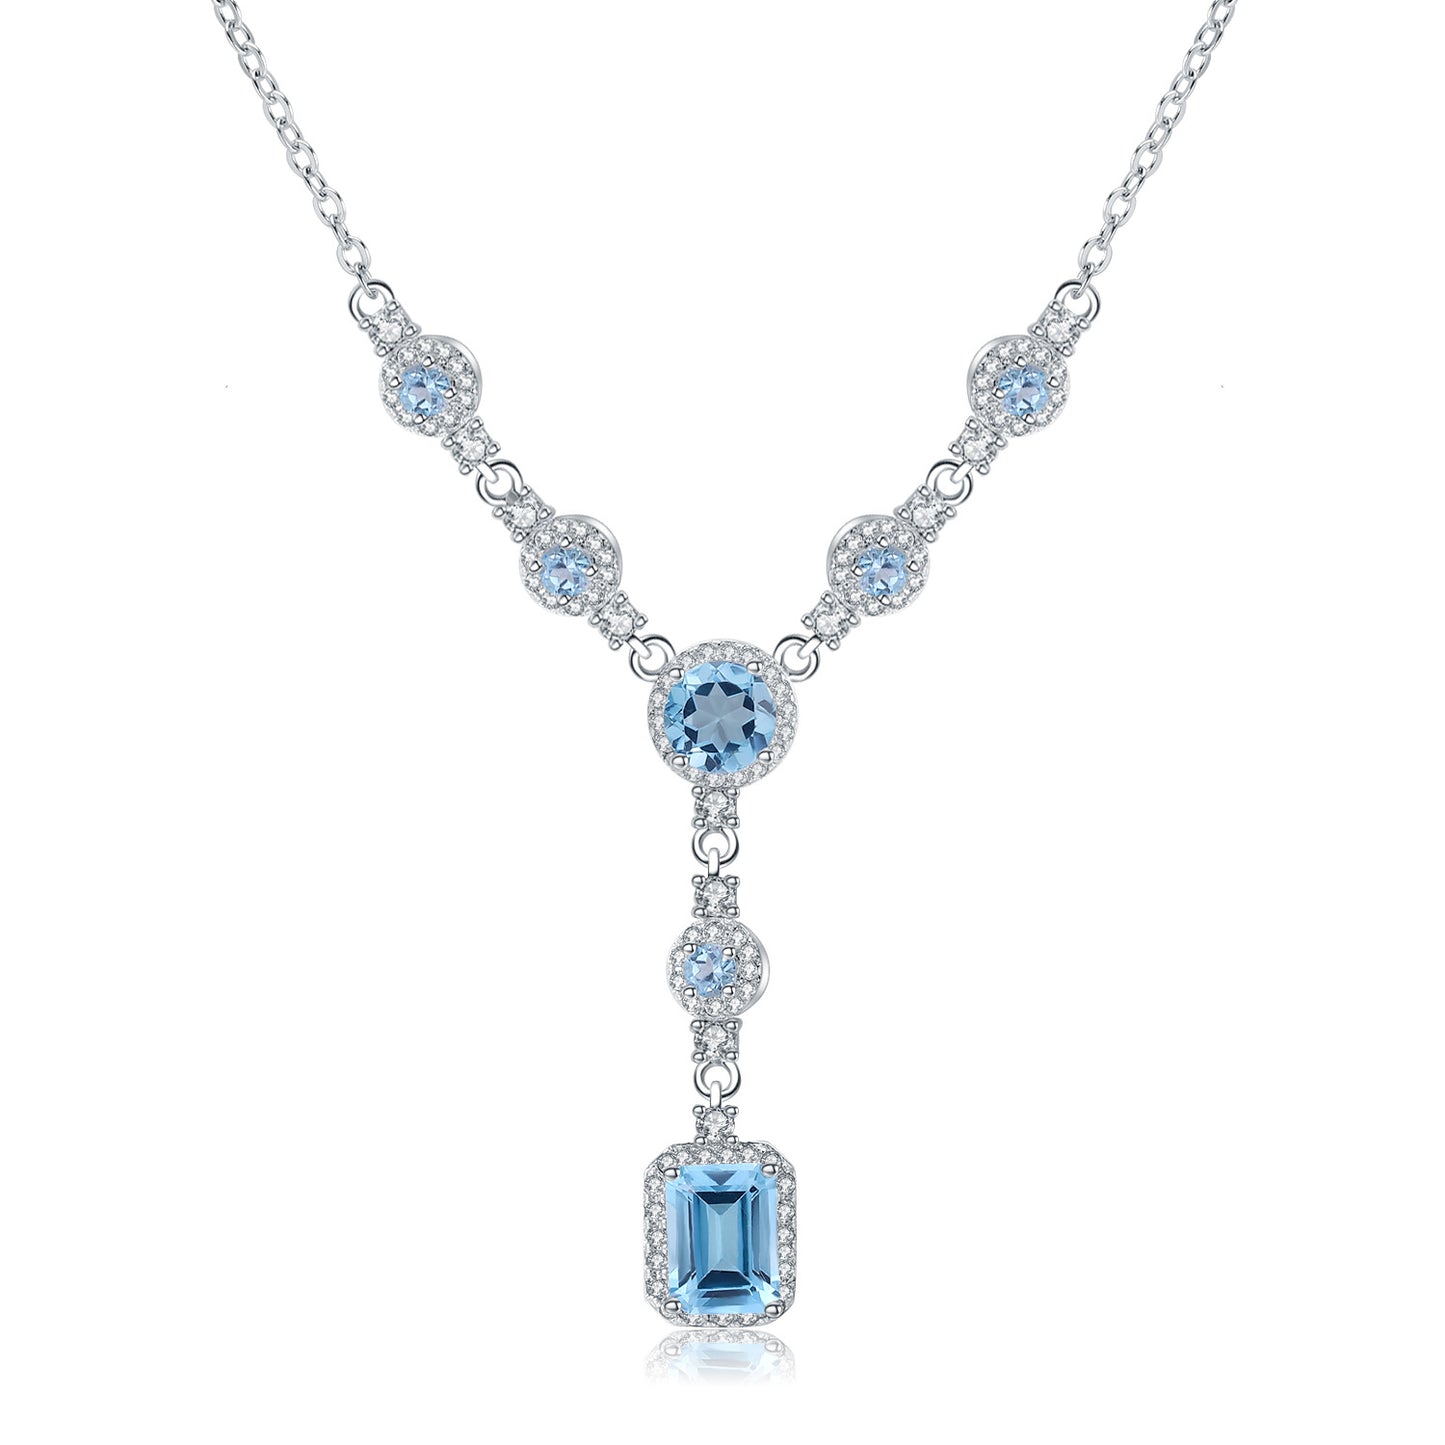 Banquet Jewelry Emerald Cut Natural Gemstones Tassels Silver Necklace